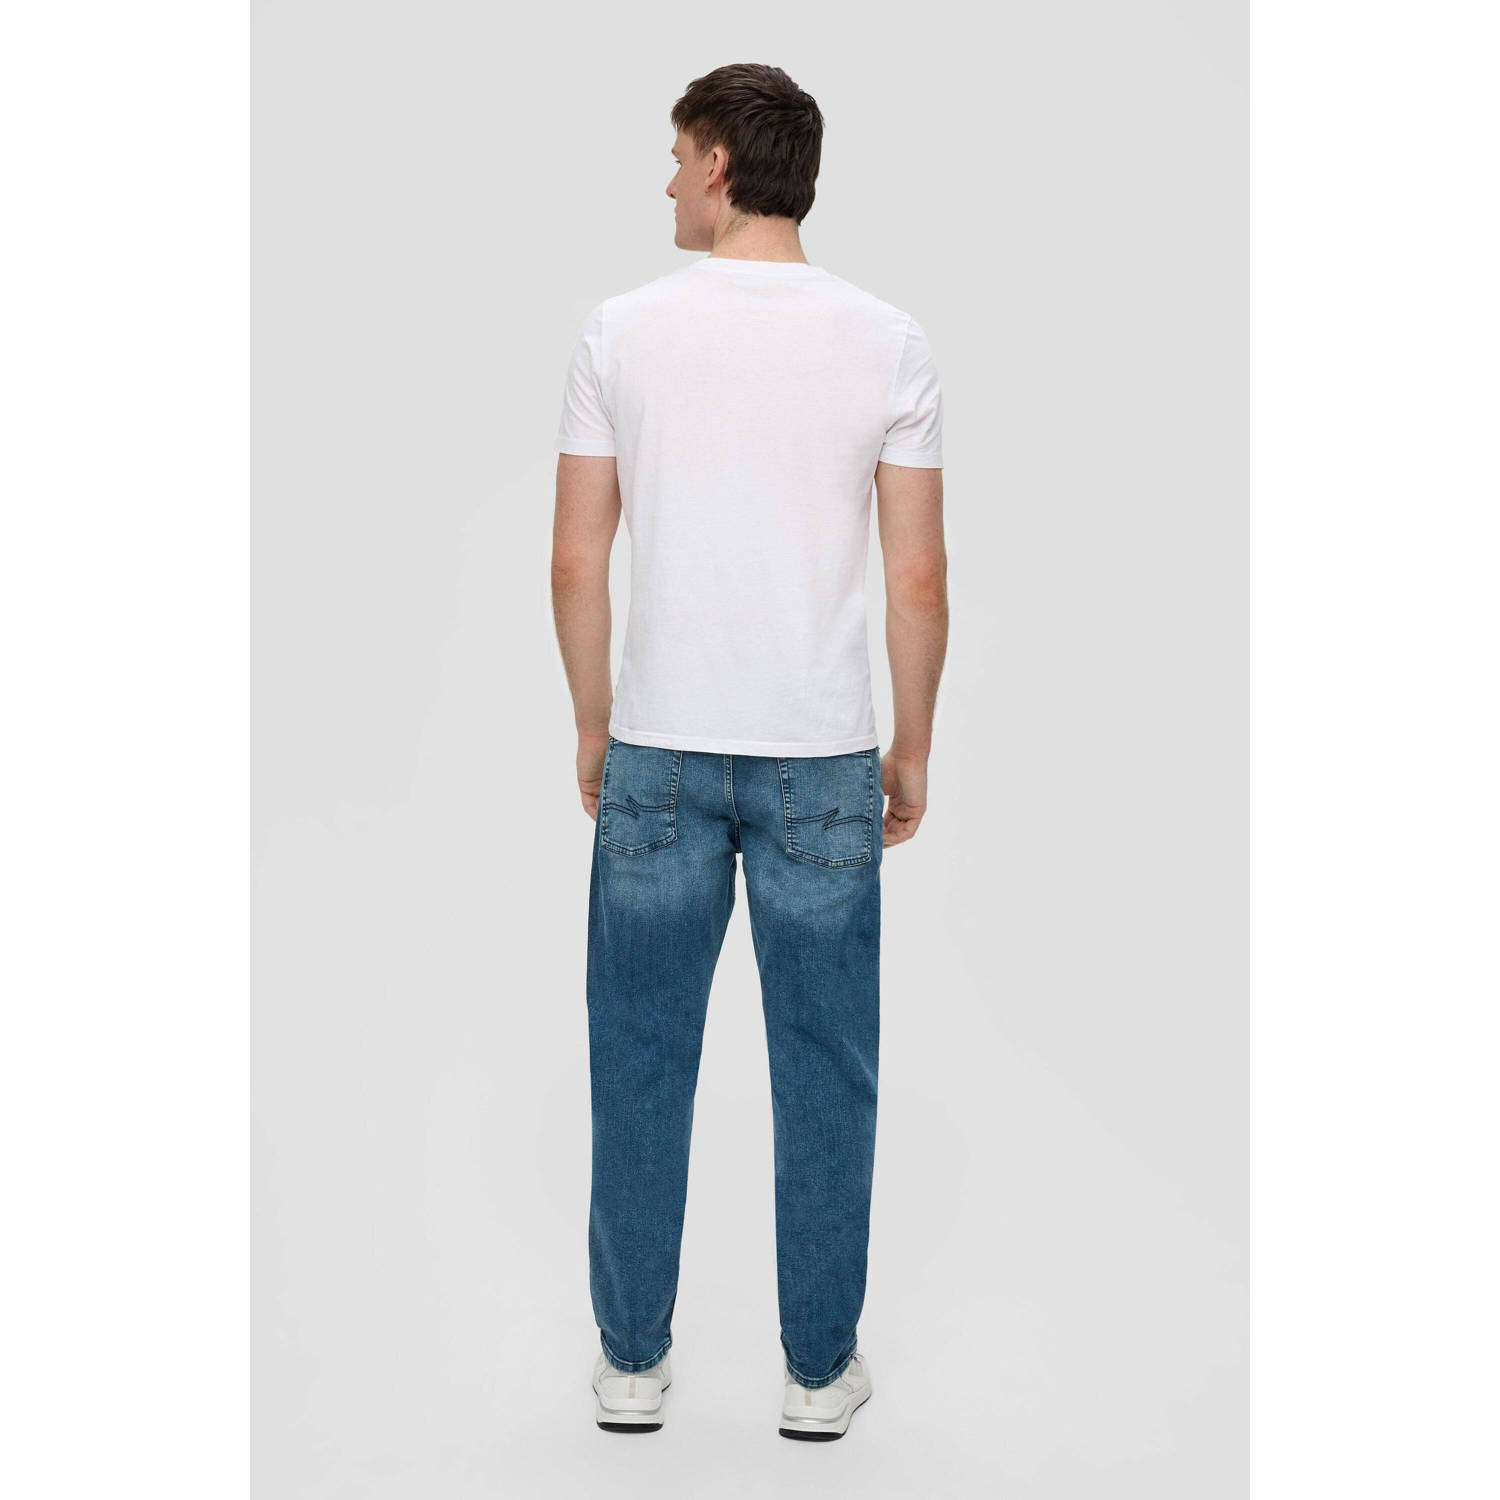 Q S by s.Oliver regular fit jeans Pete light blue denim